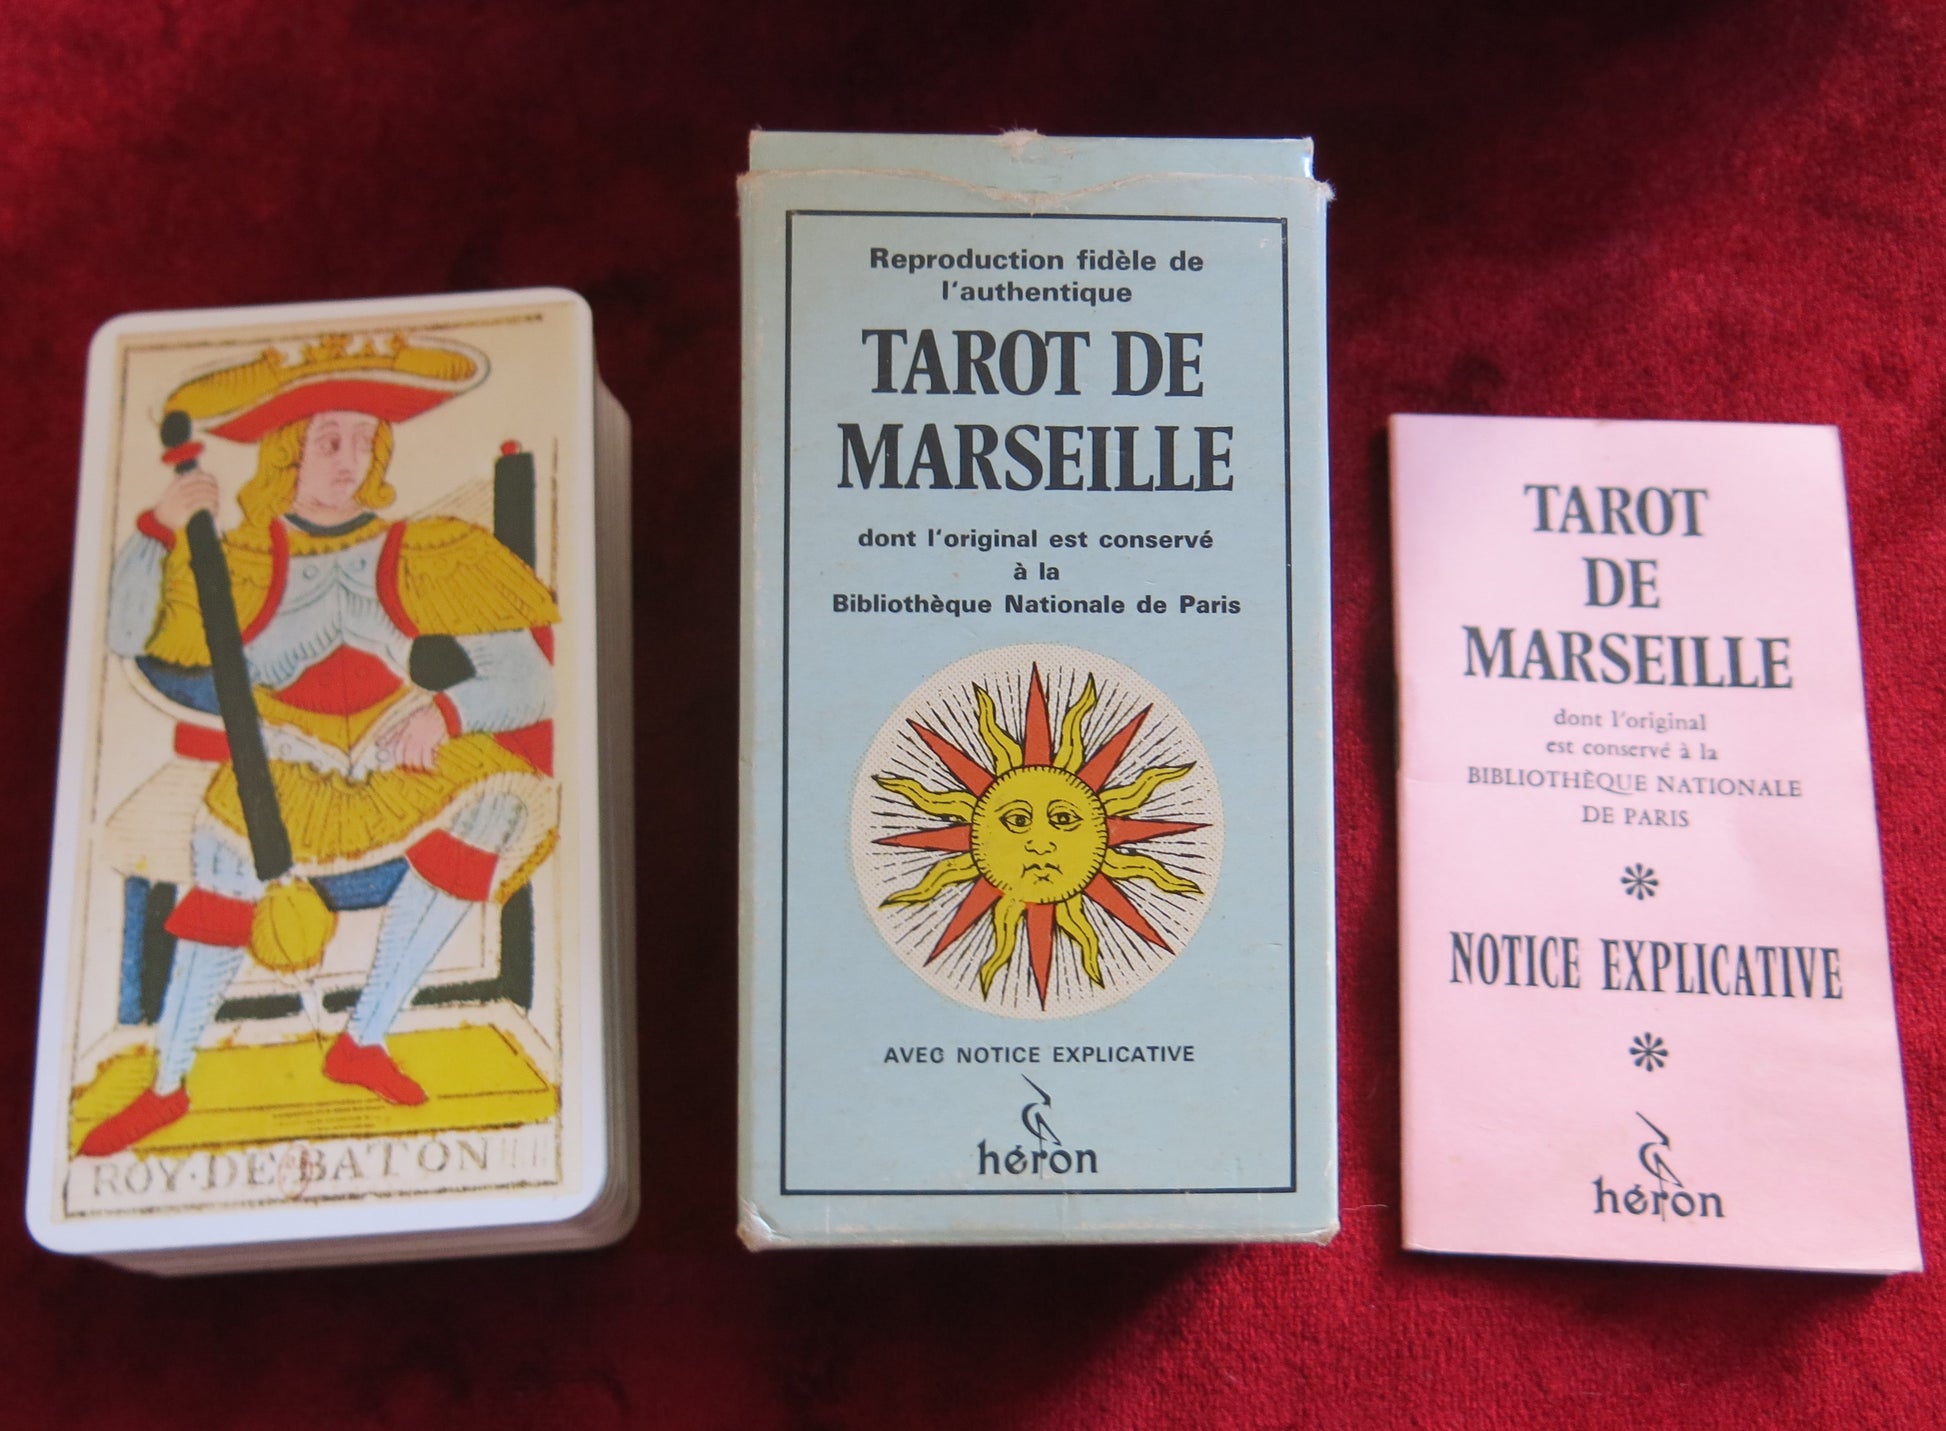 LES TAROTS DE MARSEILLE - AVEC UN JEU DE 78 CARTES (COFFRET